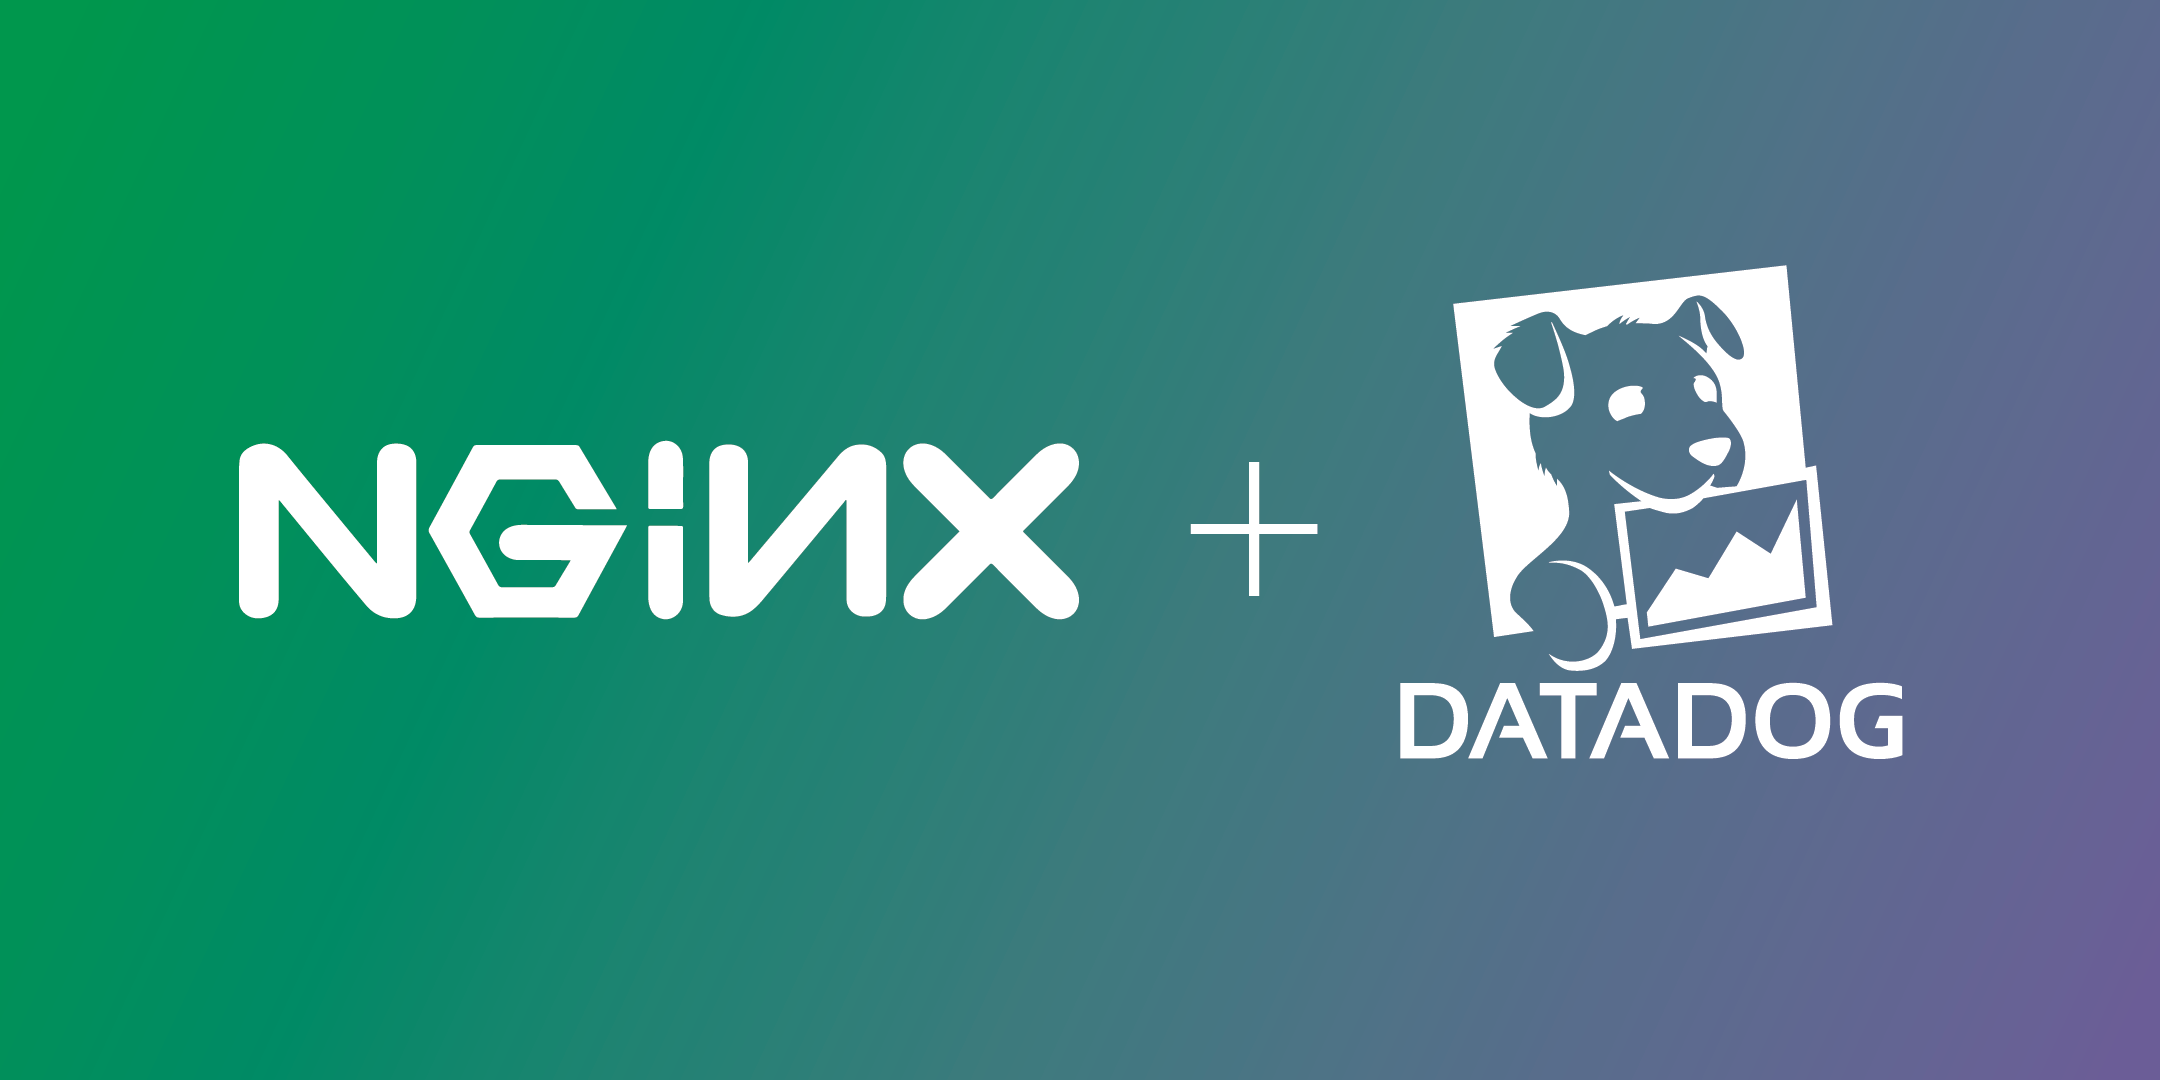 NGINX and DataDog Logos